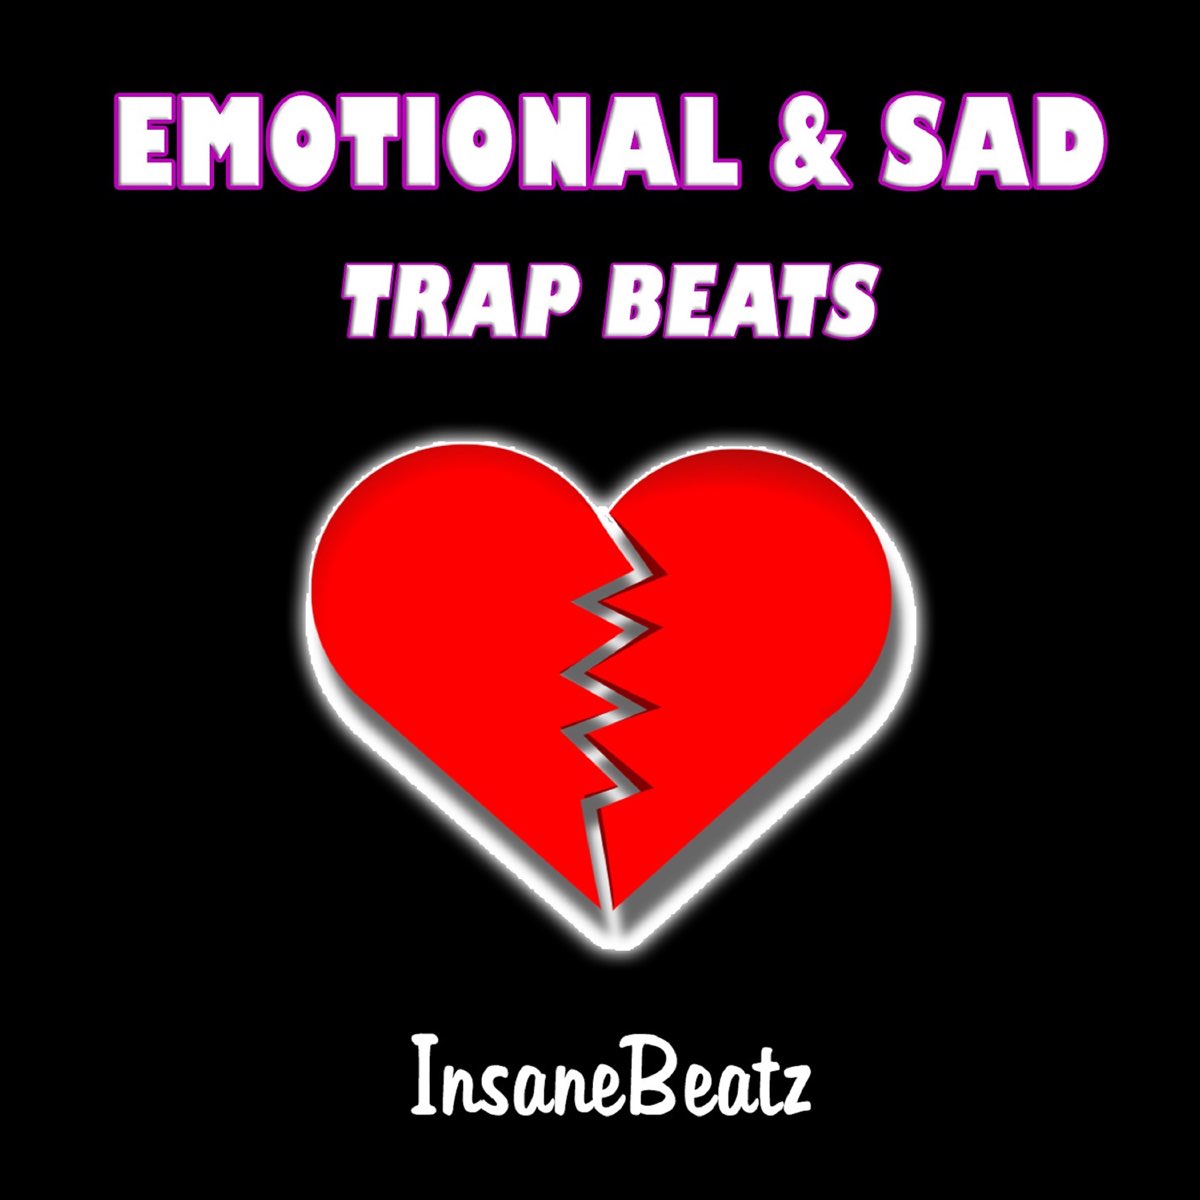 Emotional & Sad Trap Beats - Album by InsaneBeatz - Apple Music